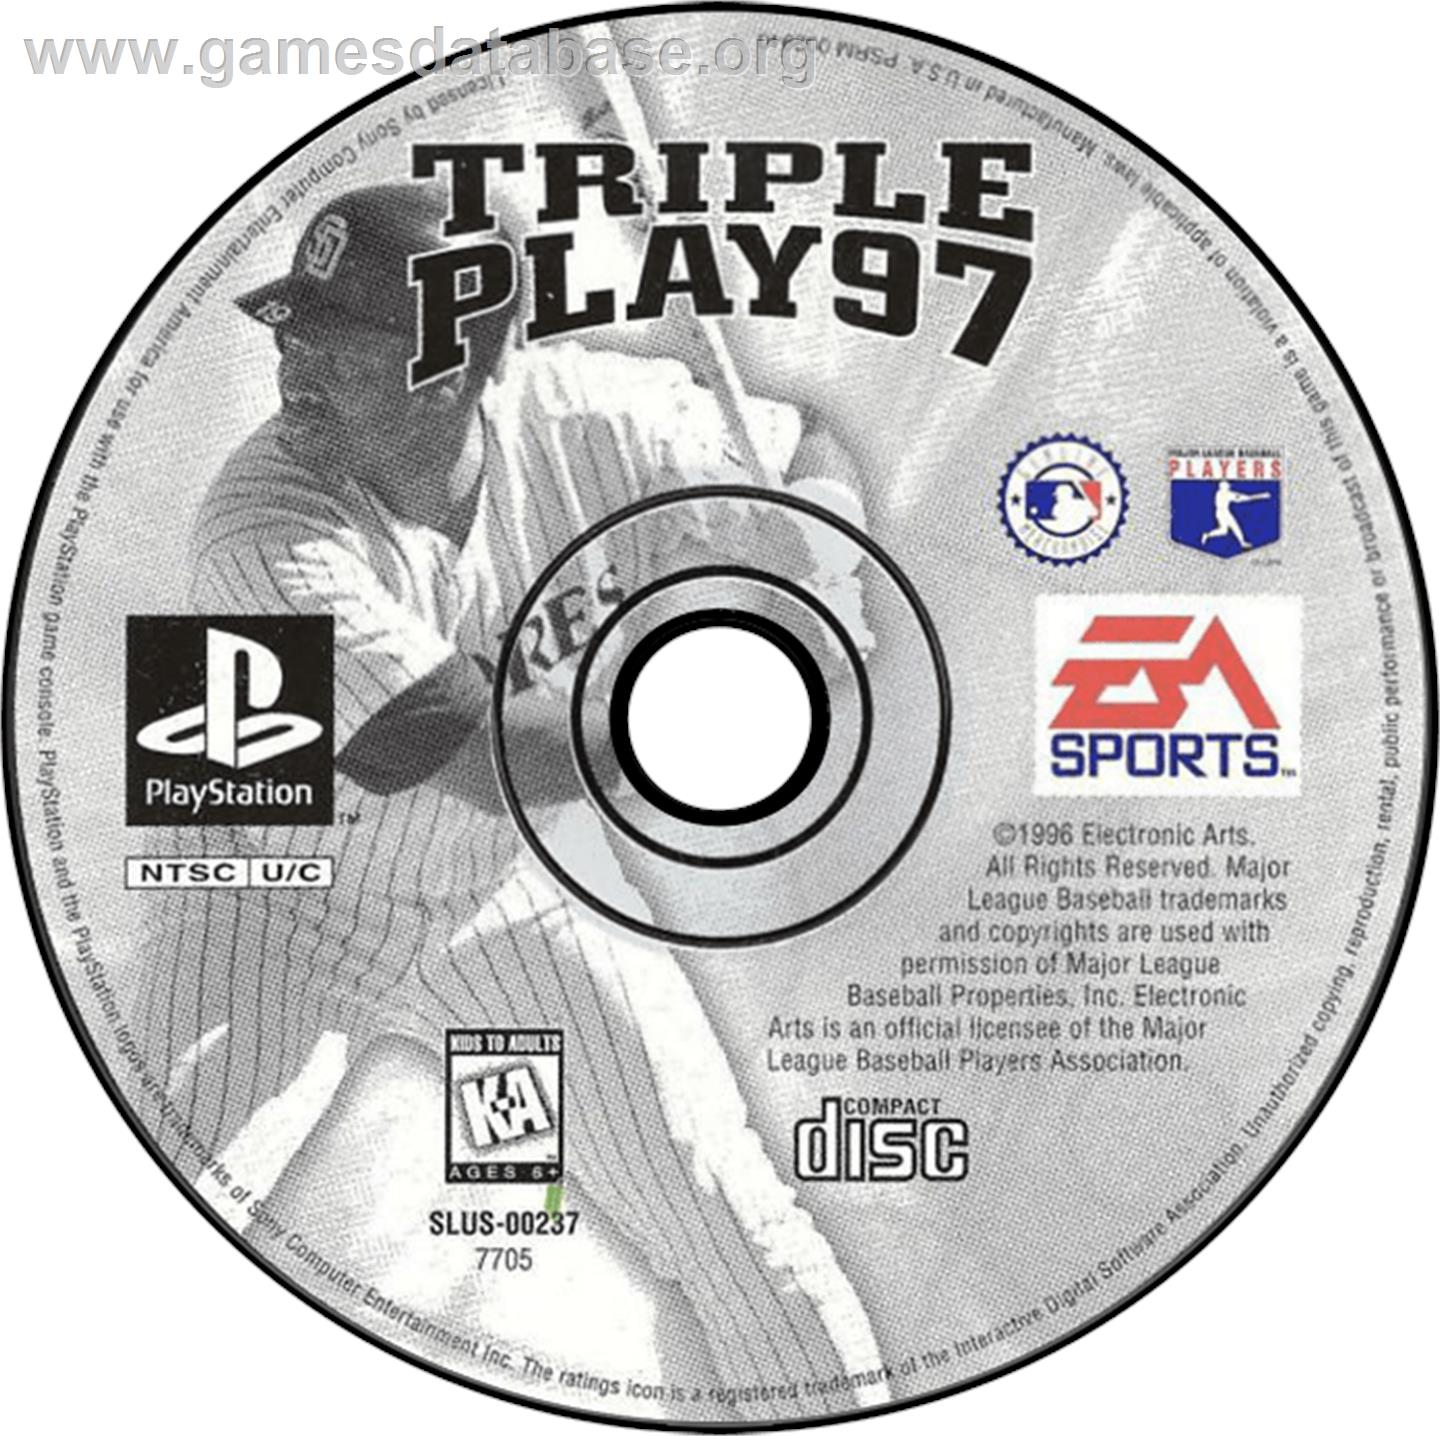 Triple Play 97 - Sony Playstation - Artwork - Disc